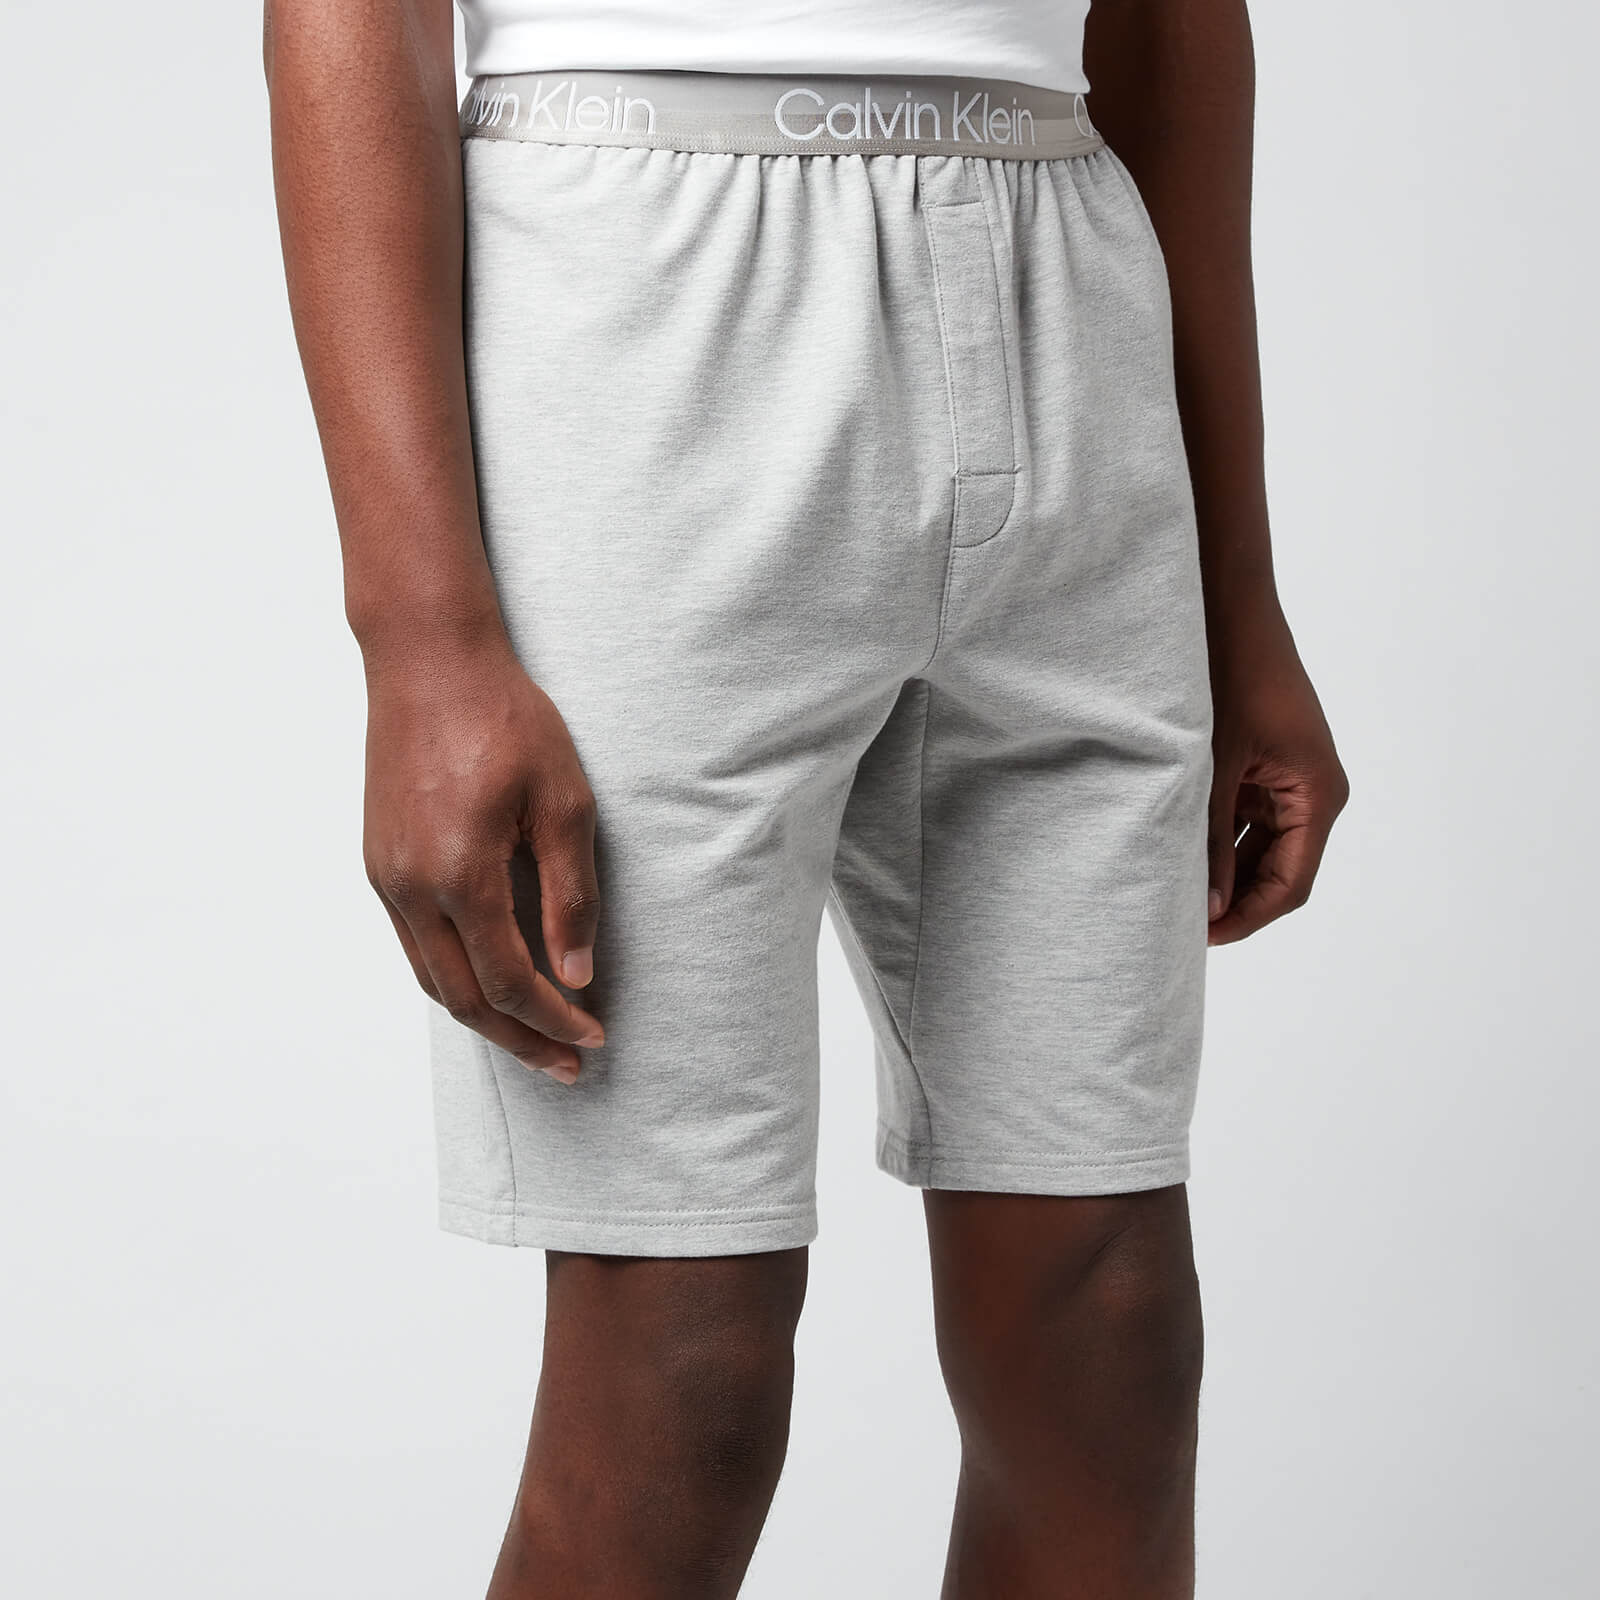 Calvin Klein Men's Sleep Shorts - Grey Heather - S